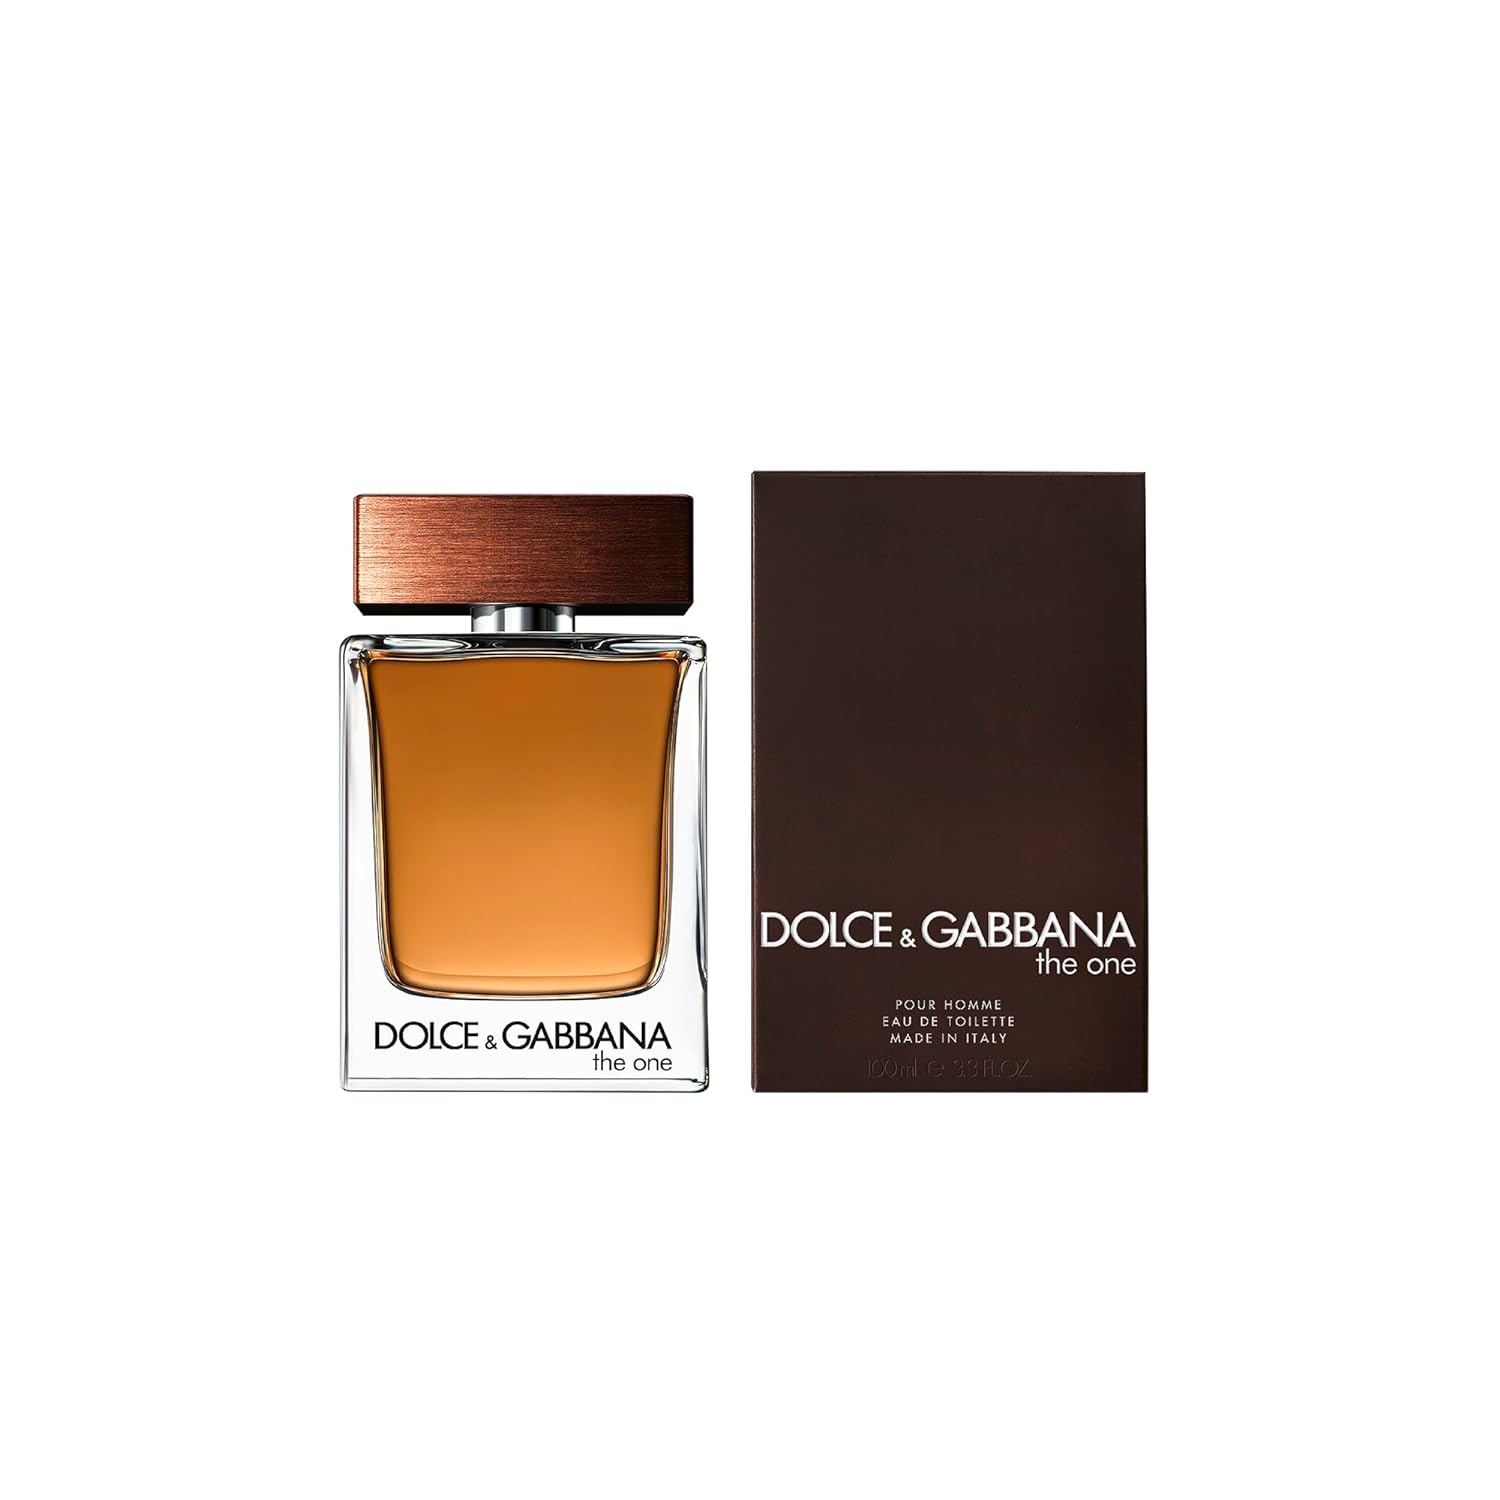 Dolce & Gabbana The One, Eau De Toilette Spray, Fragrance For Men 3.4oz